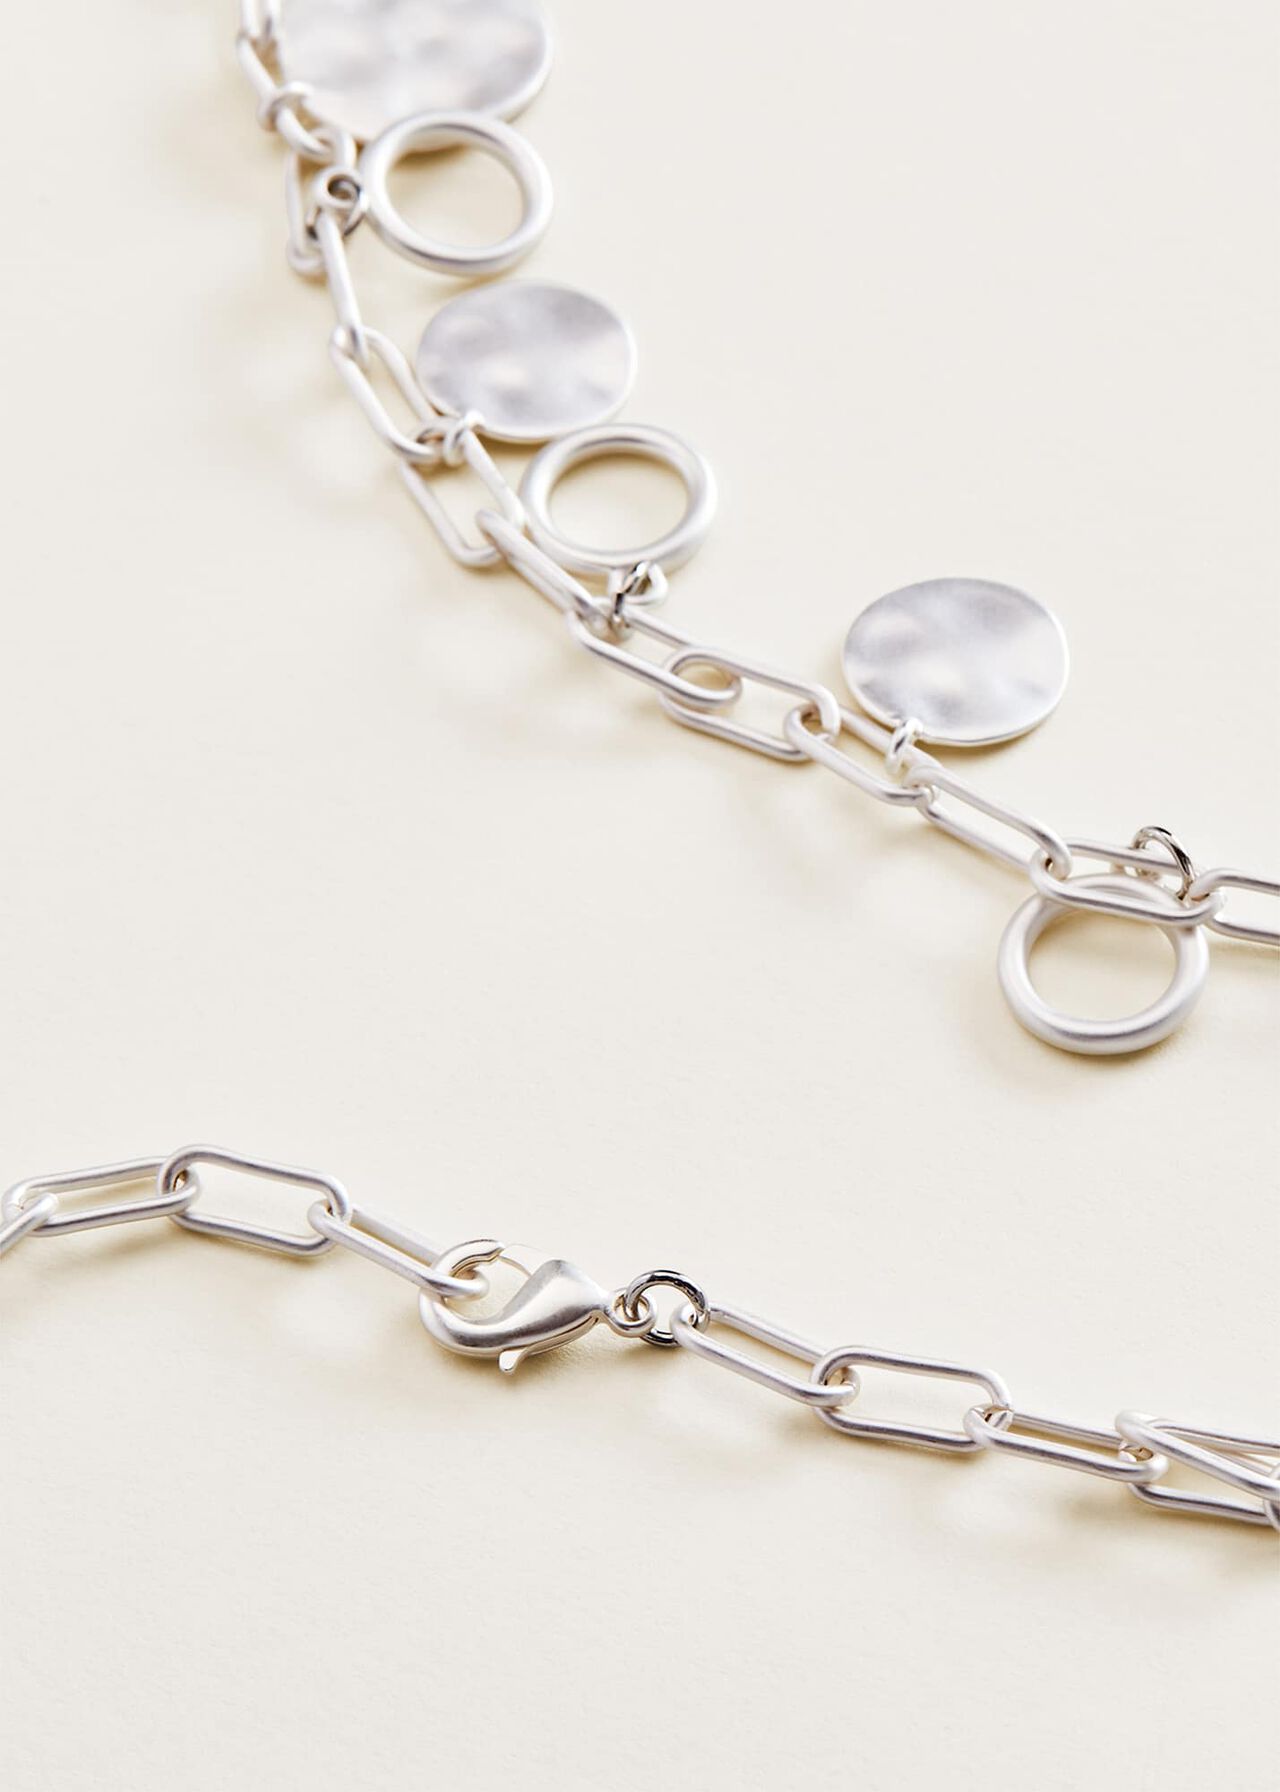 Zoia Long Chain Pendant Necklace